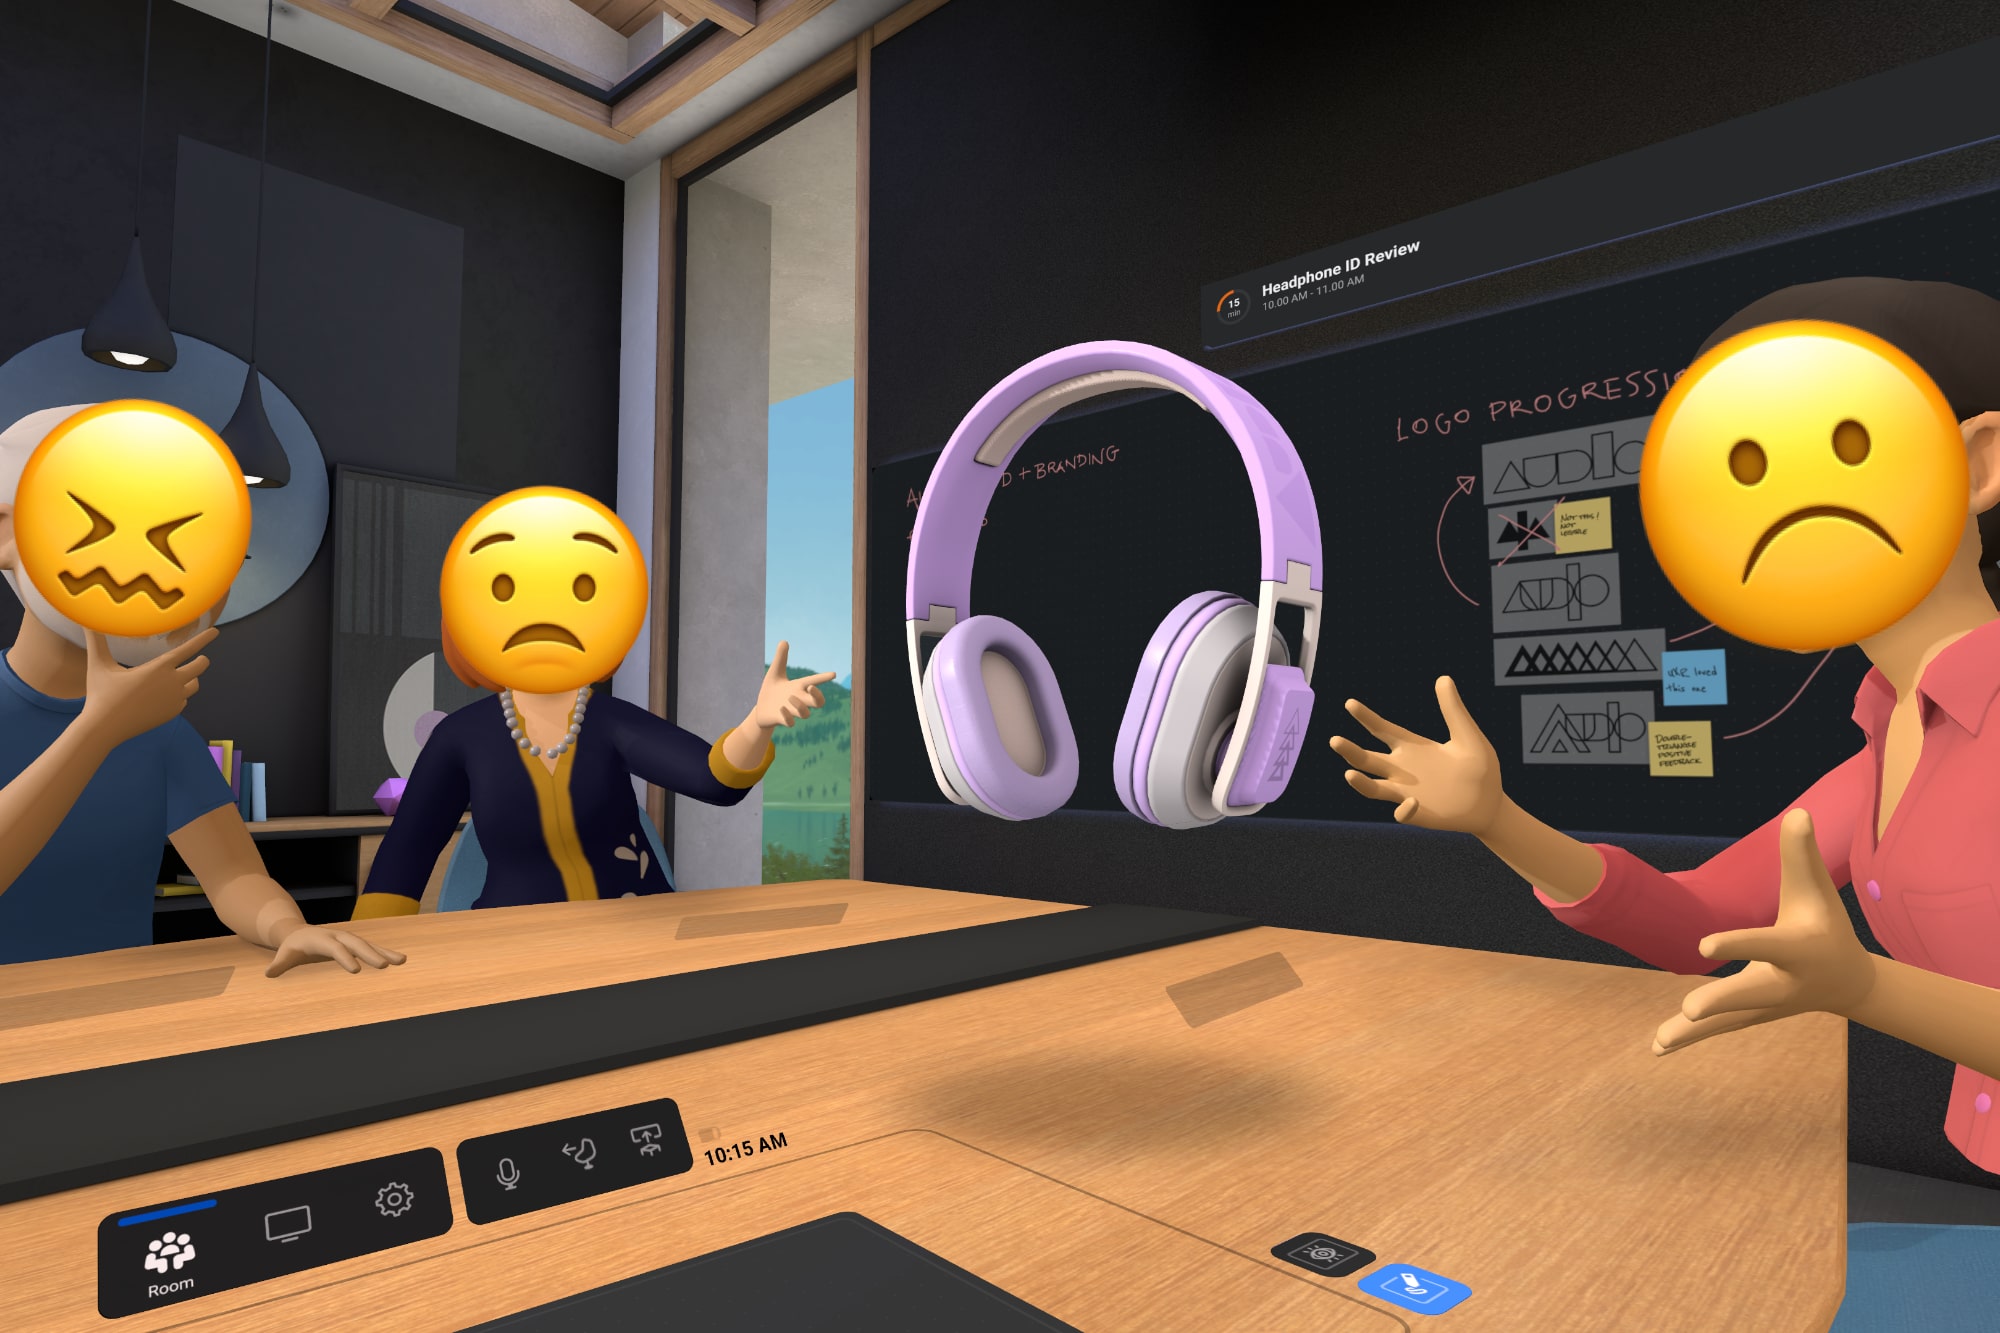 O exemplo Meta Quest Pro Horizon Workrooms foi alterado com emojis infelizes sobre os avatares.